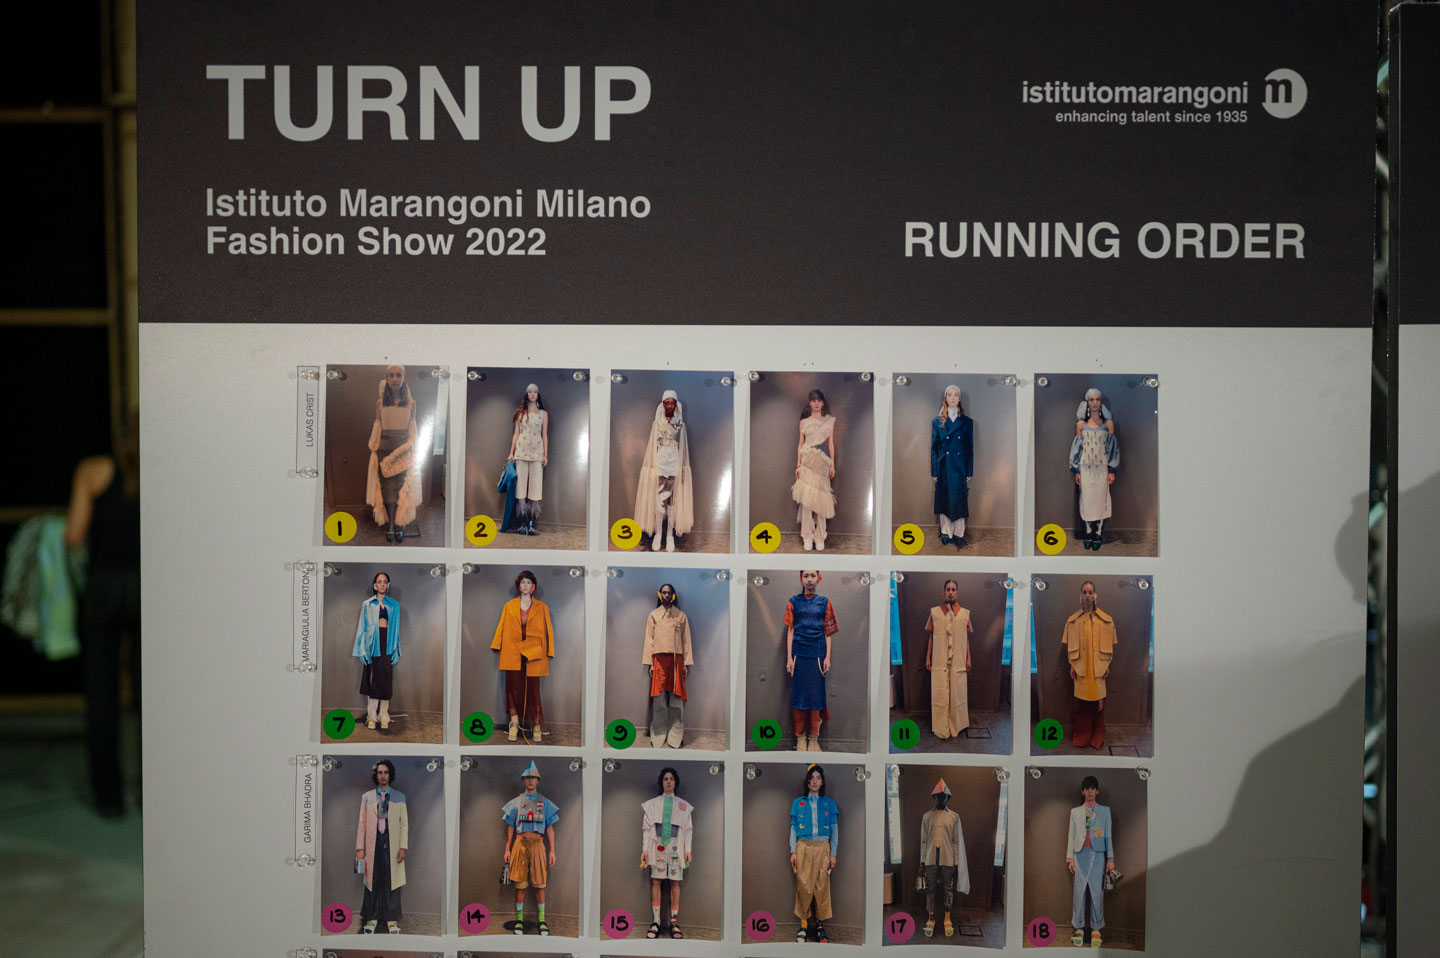 Backstage at Istituto Marangoni's "Turn Up" fashion runway show